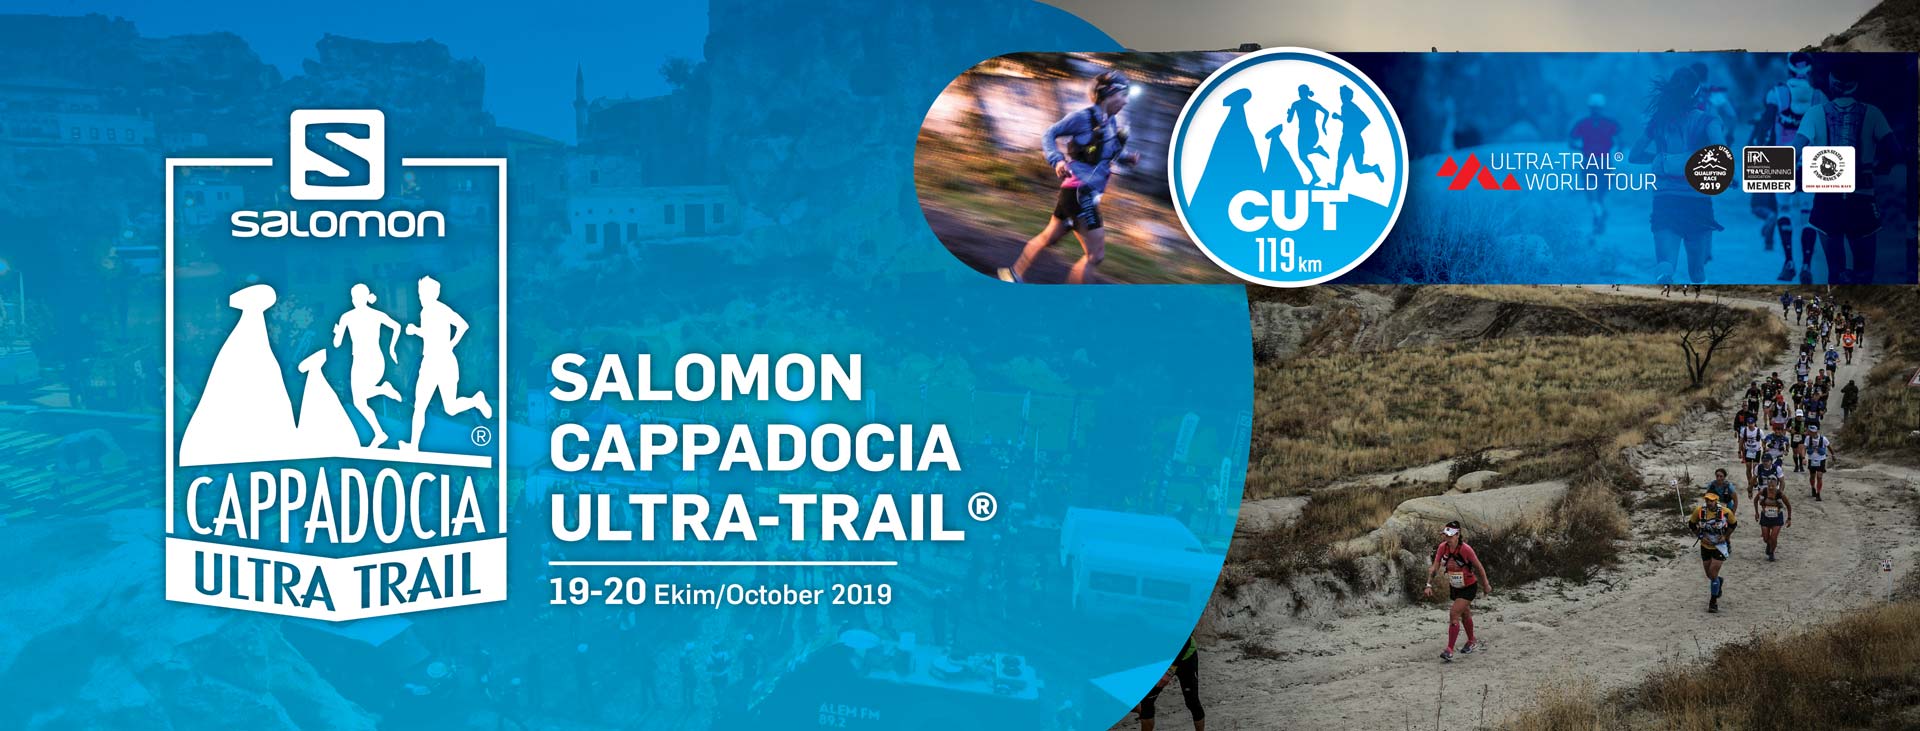 Home - Salomon Cappadocia Ultra-Trail®